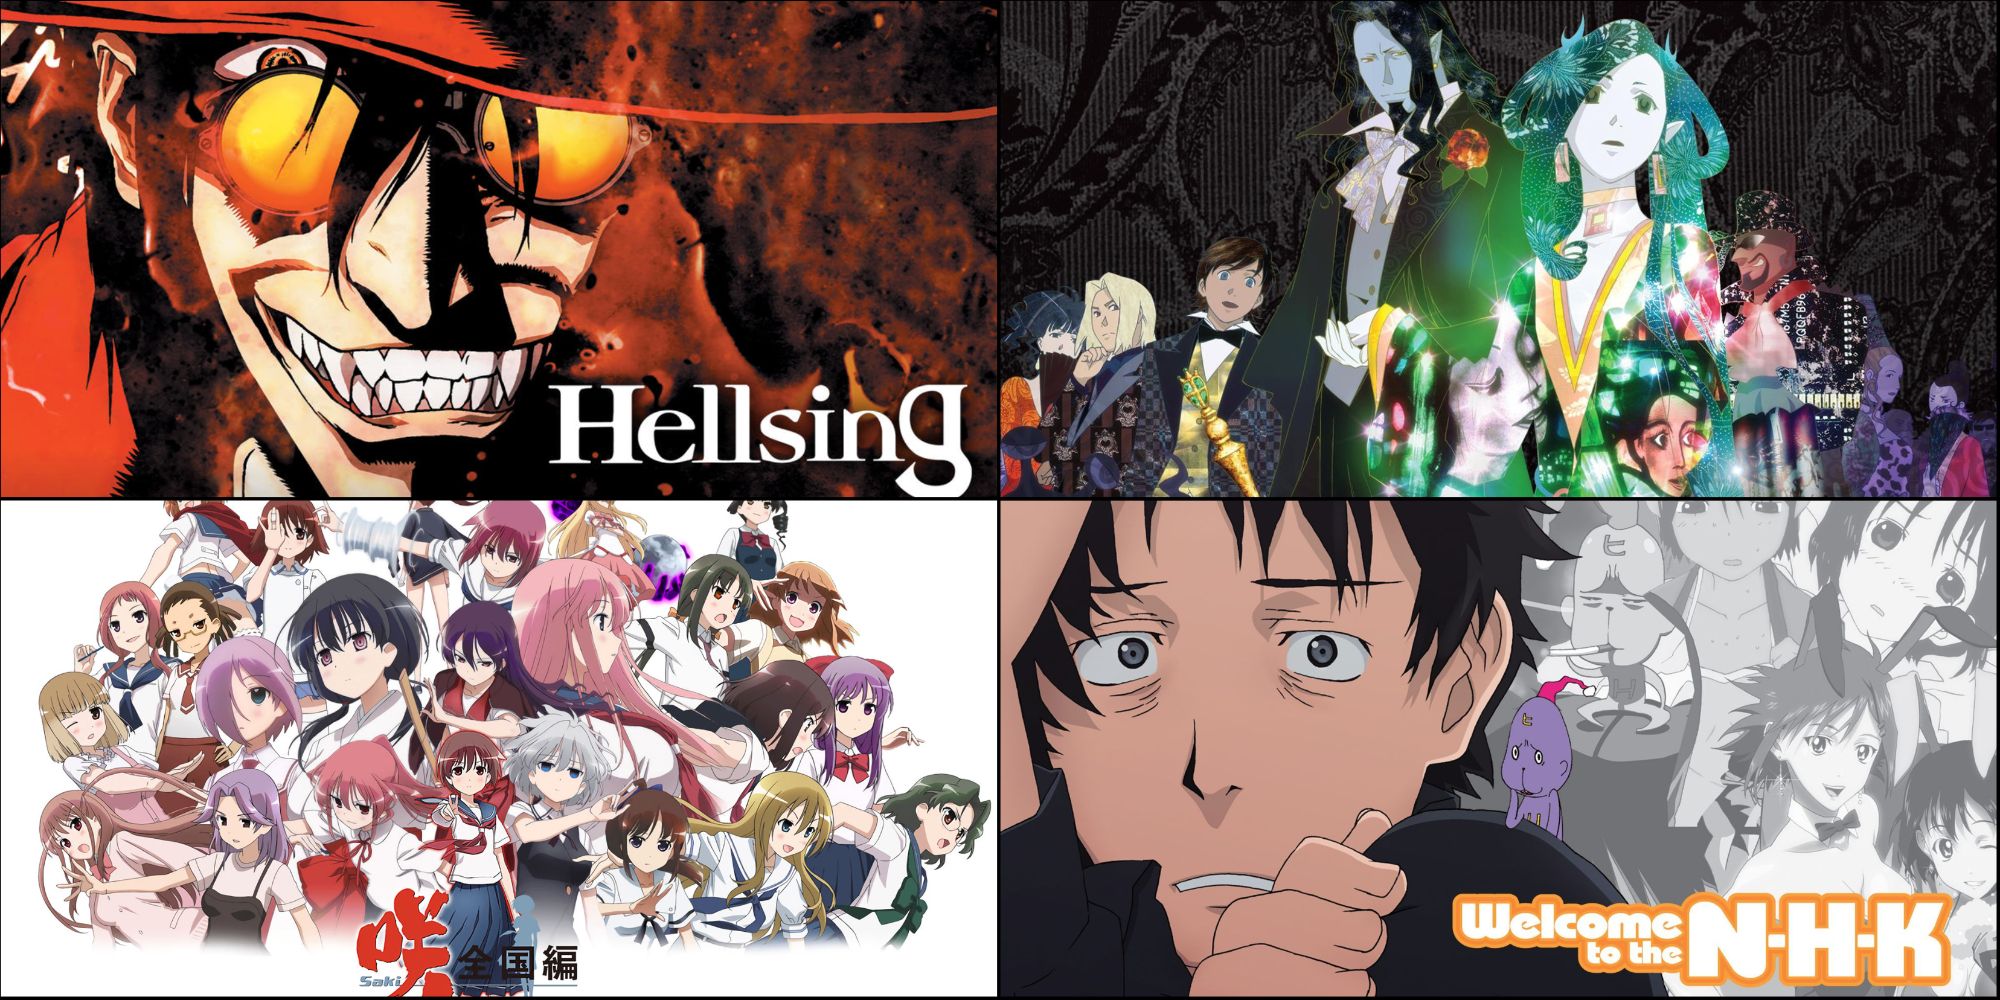 Hellsing, Welcome of NHK, Saki and Gankutsuou